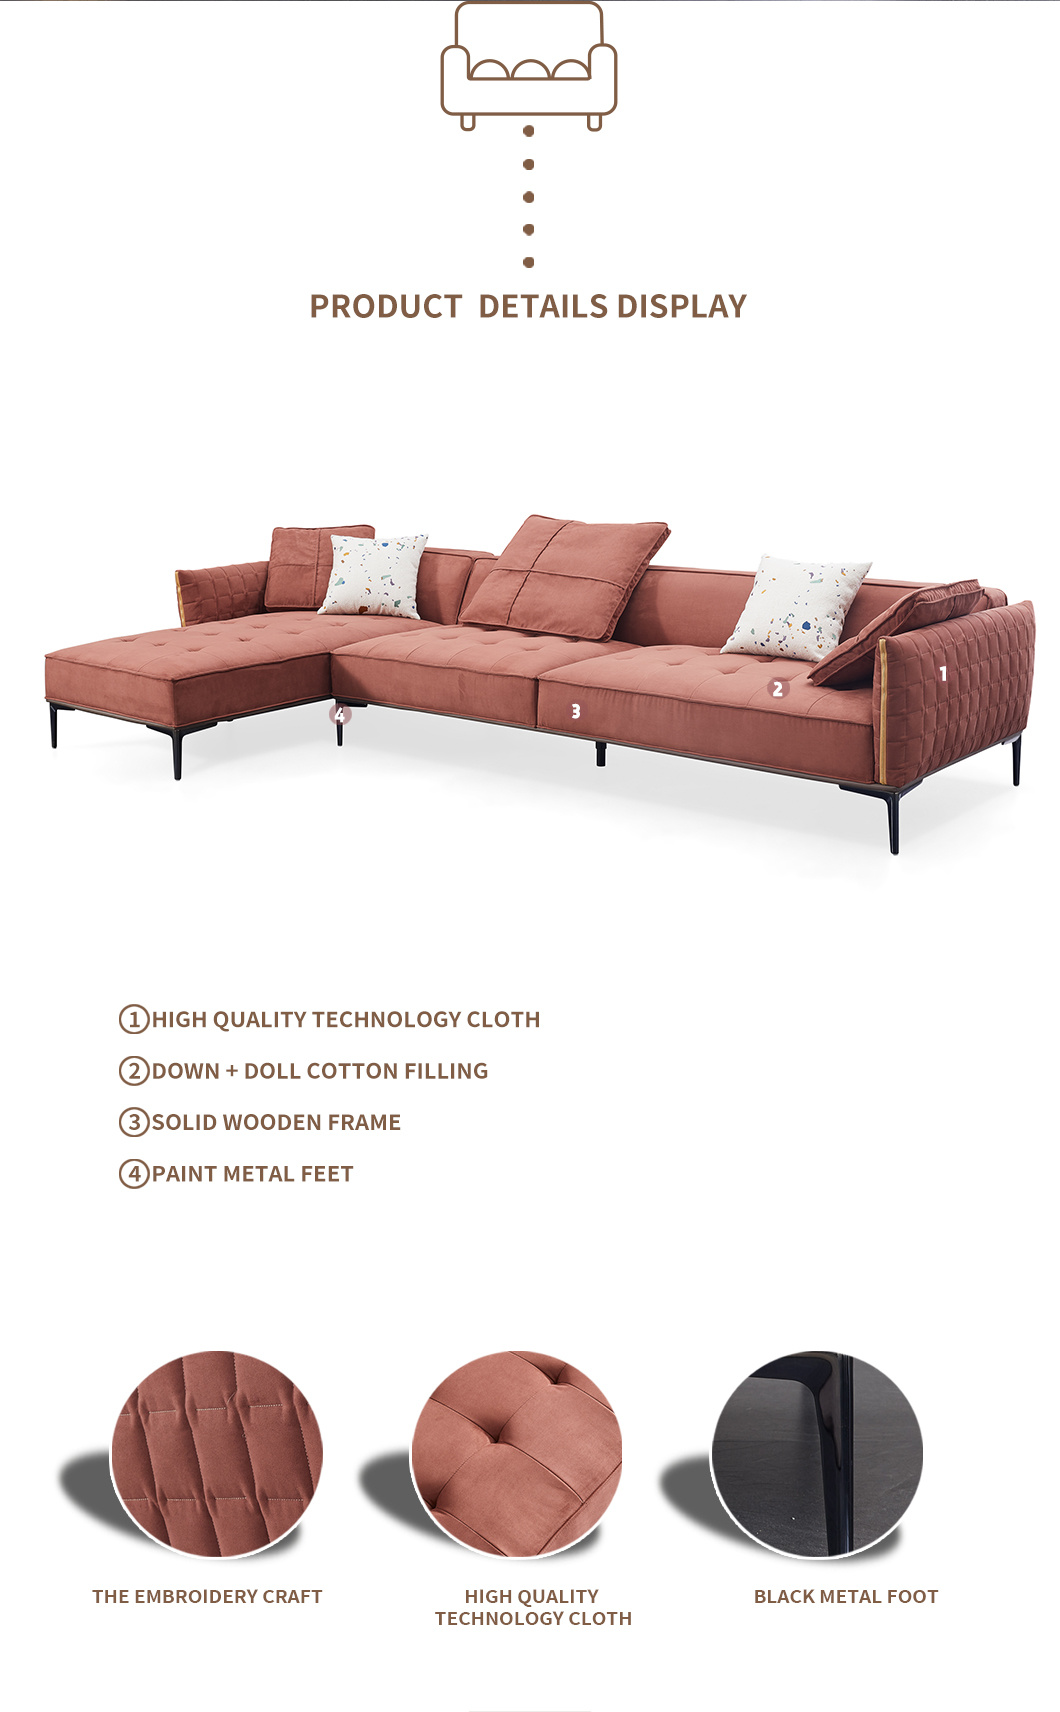 High-End Technology Cloth Sofa Modern Sectional Sofa Home Furniture